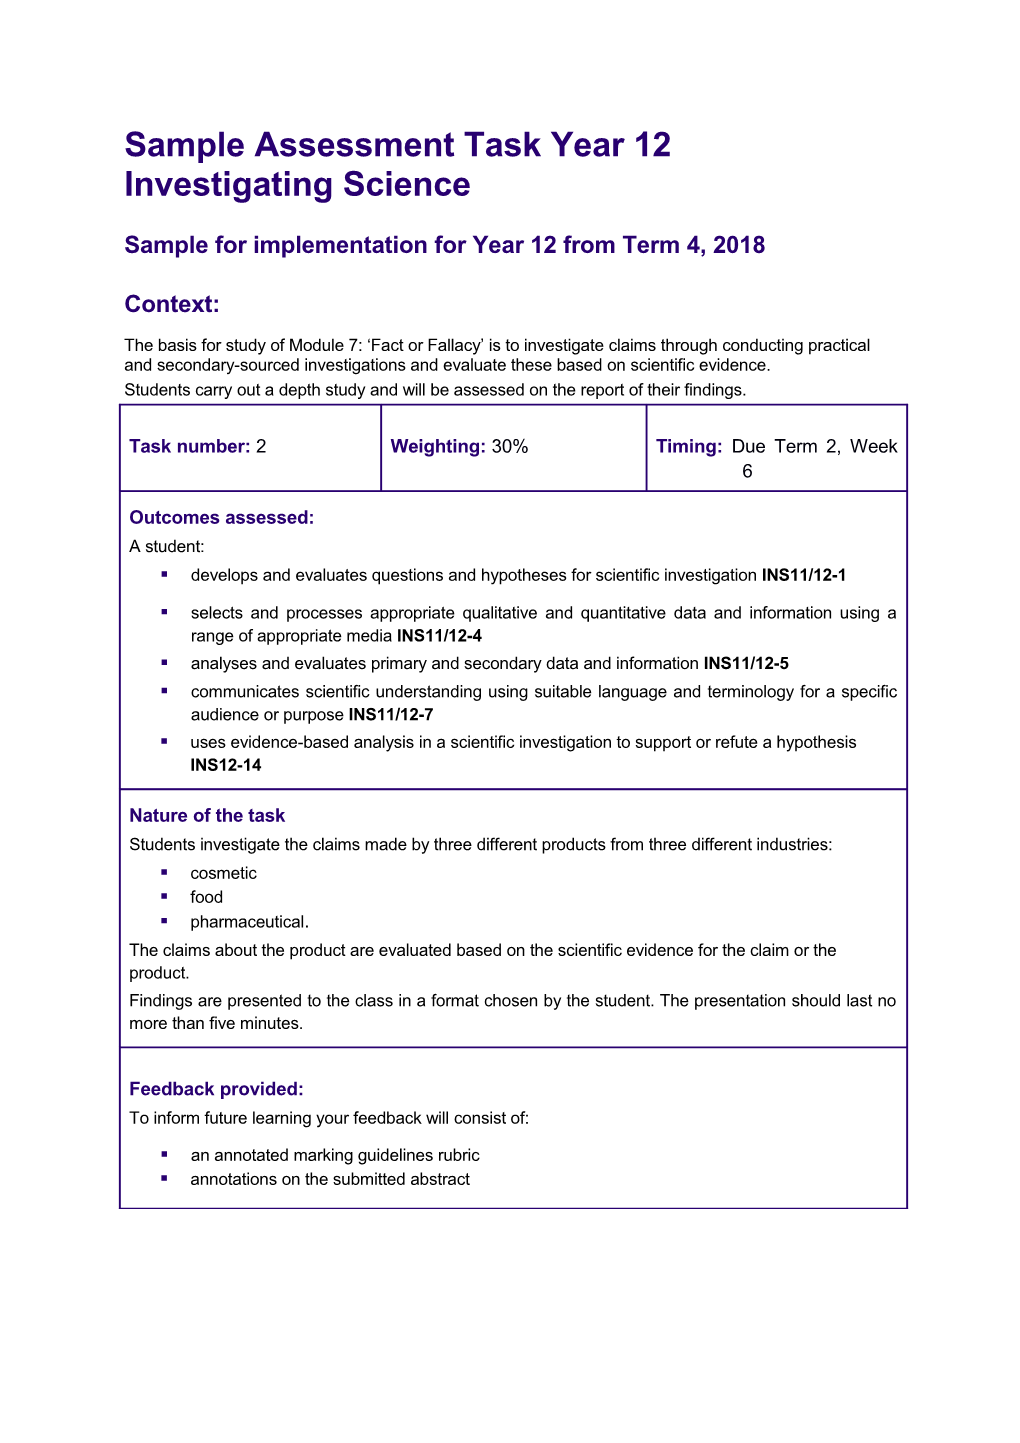 Sample Assessment Task Year 12 Investigating Science D2017/13947